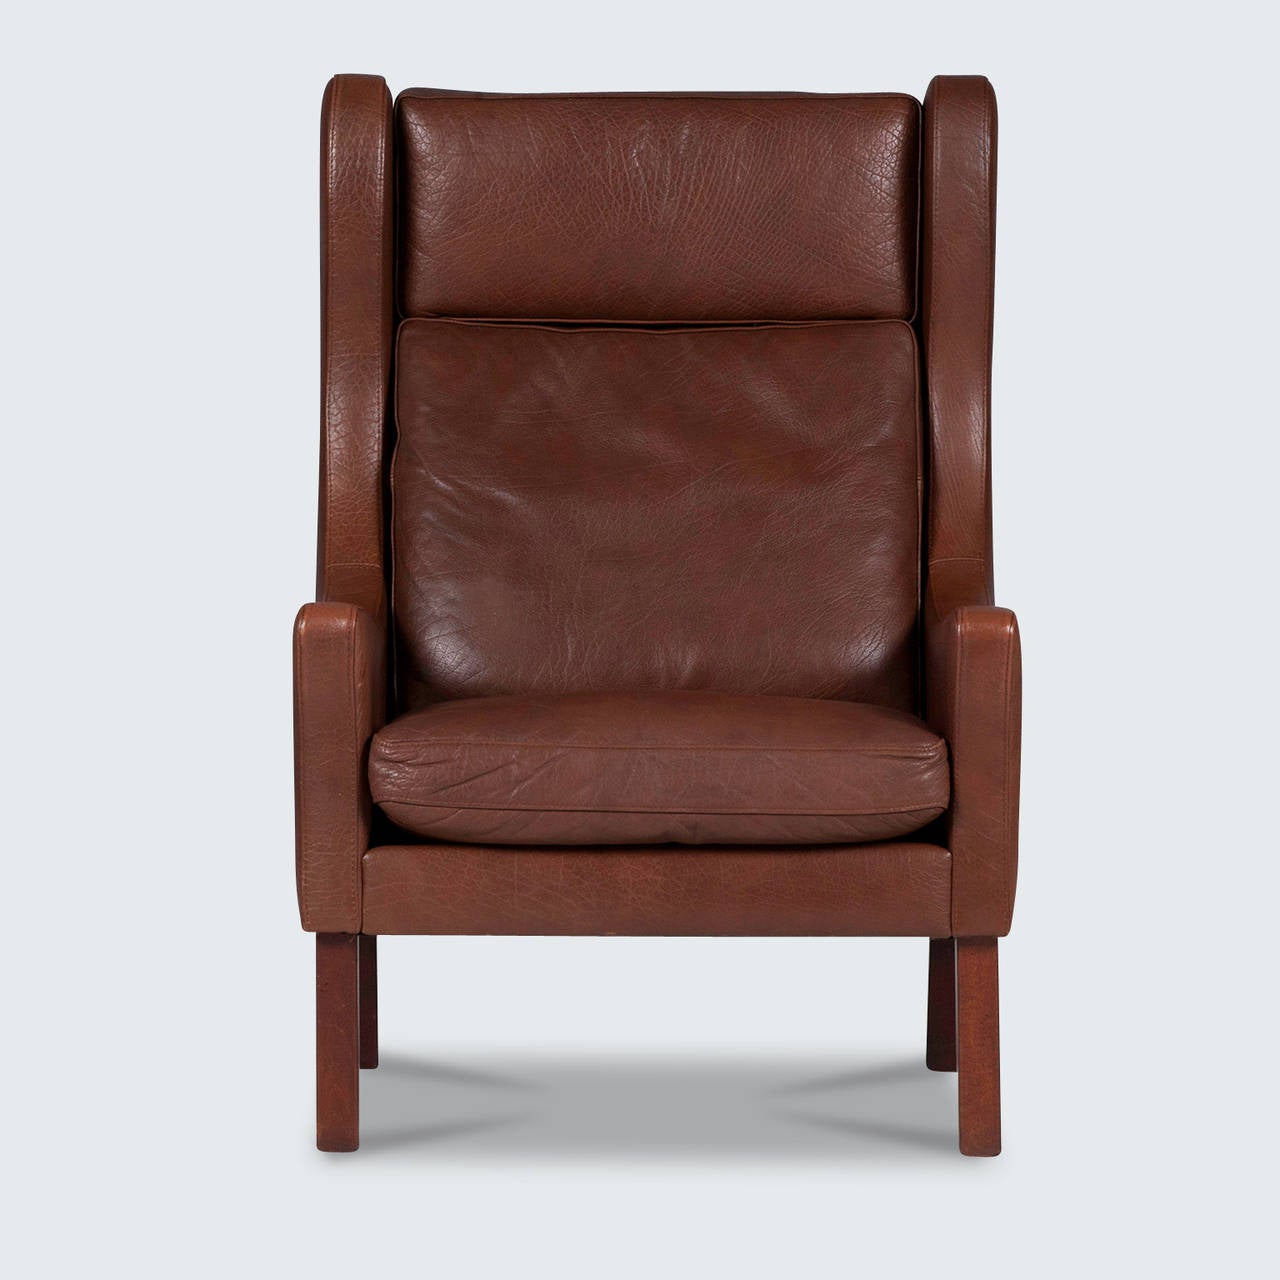 Vintage Danish Wingback Armchair In Dark Brown Leather, 1960s at 1stdibs